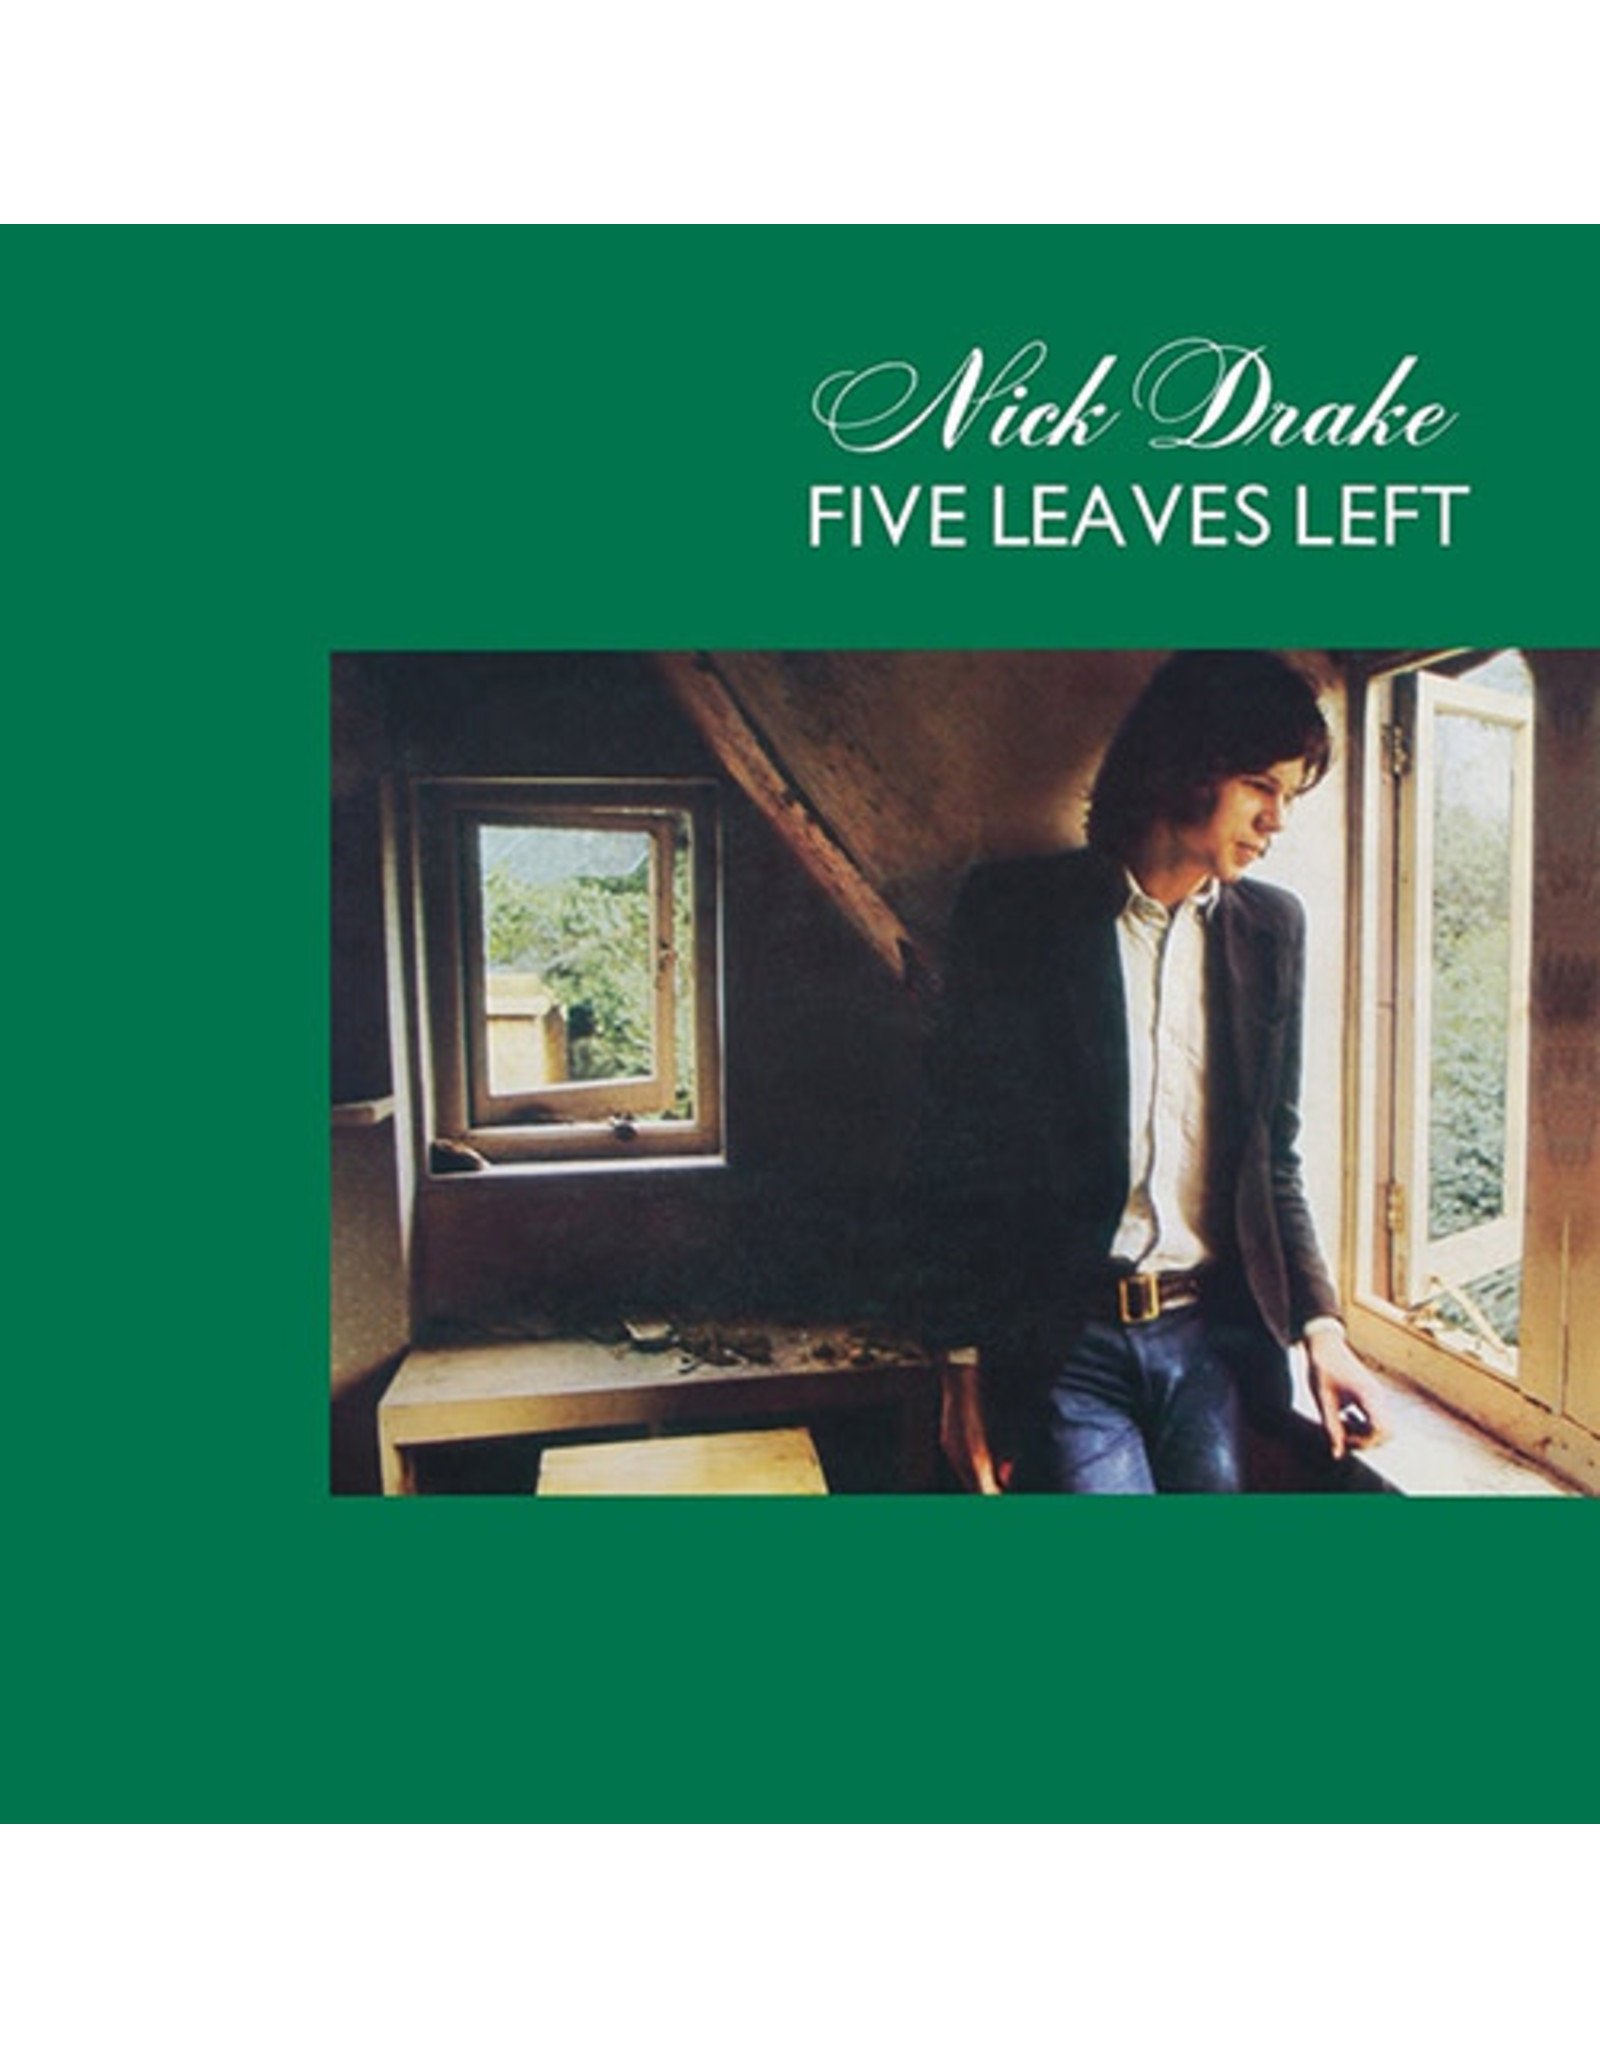 Island Drake, Nick: Five Leaves Left LP